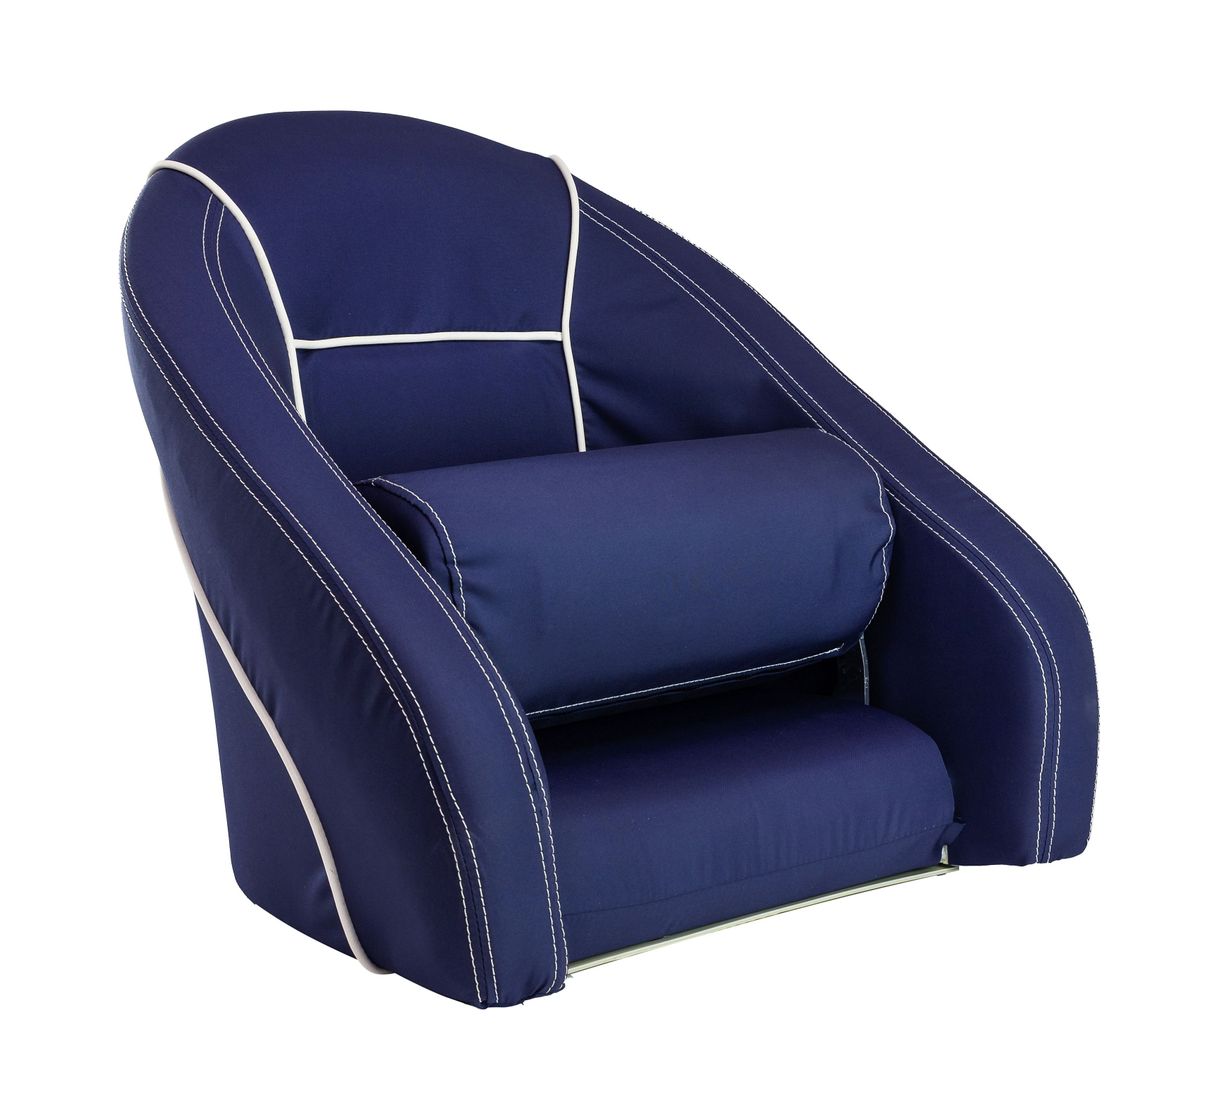 Кресло ROMEO мягкое, подставка, обивка ткань Markilux темно-синяя купить c доставкой